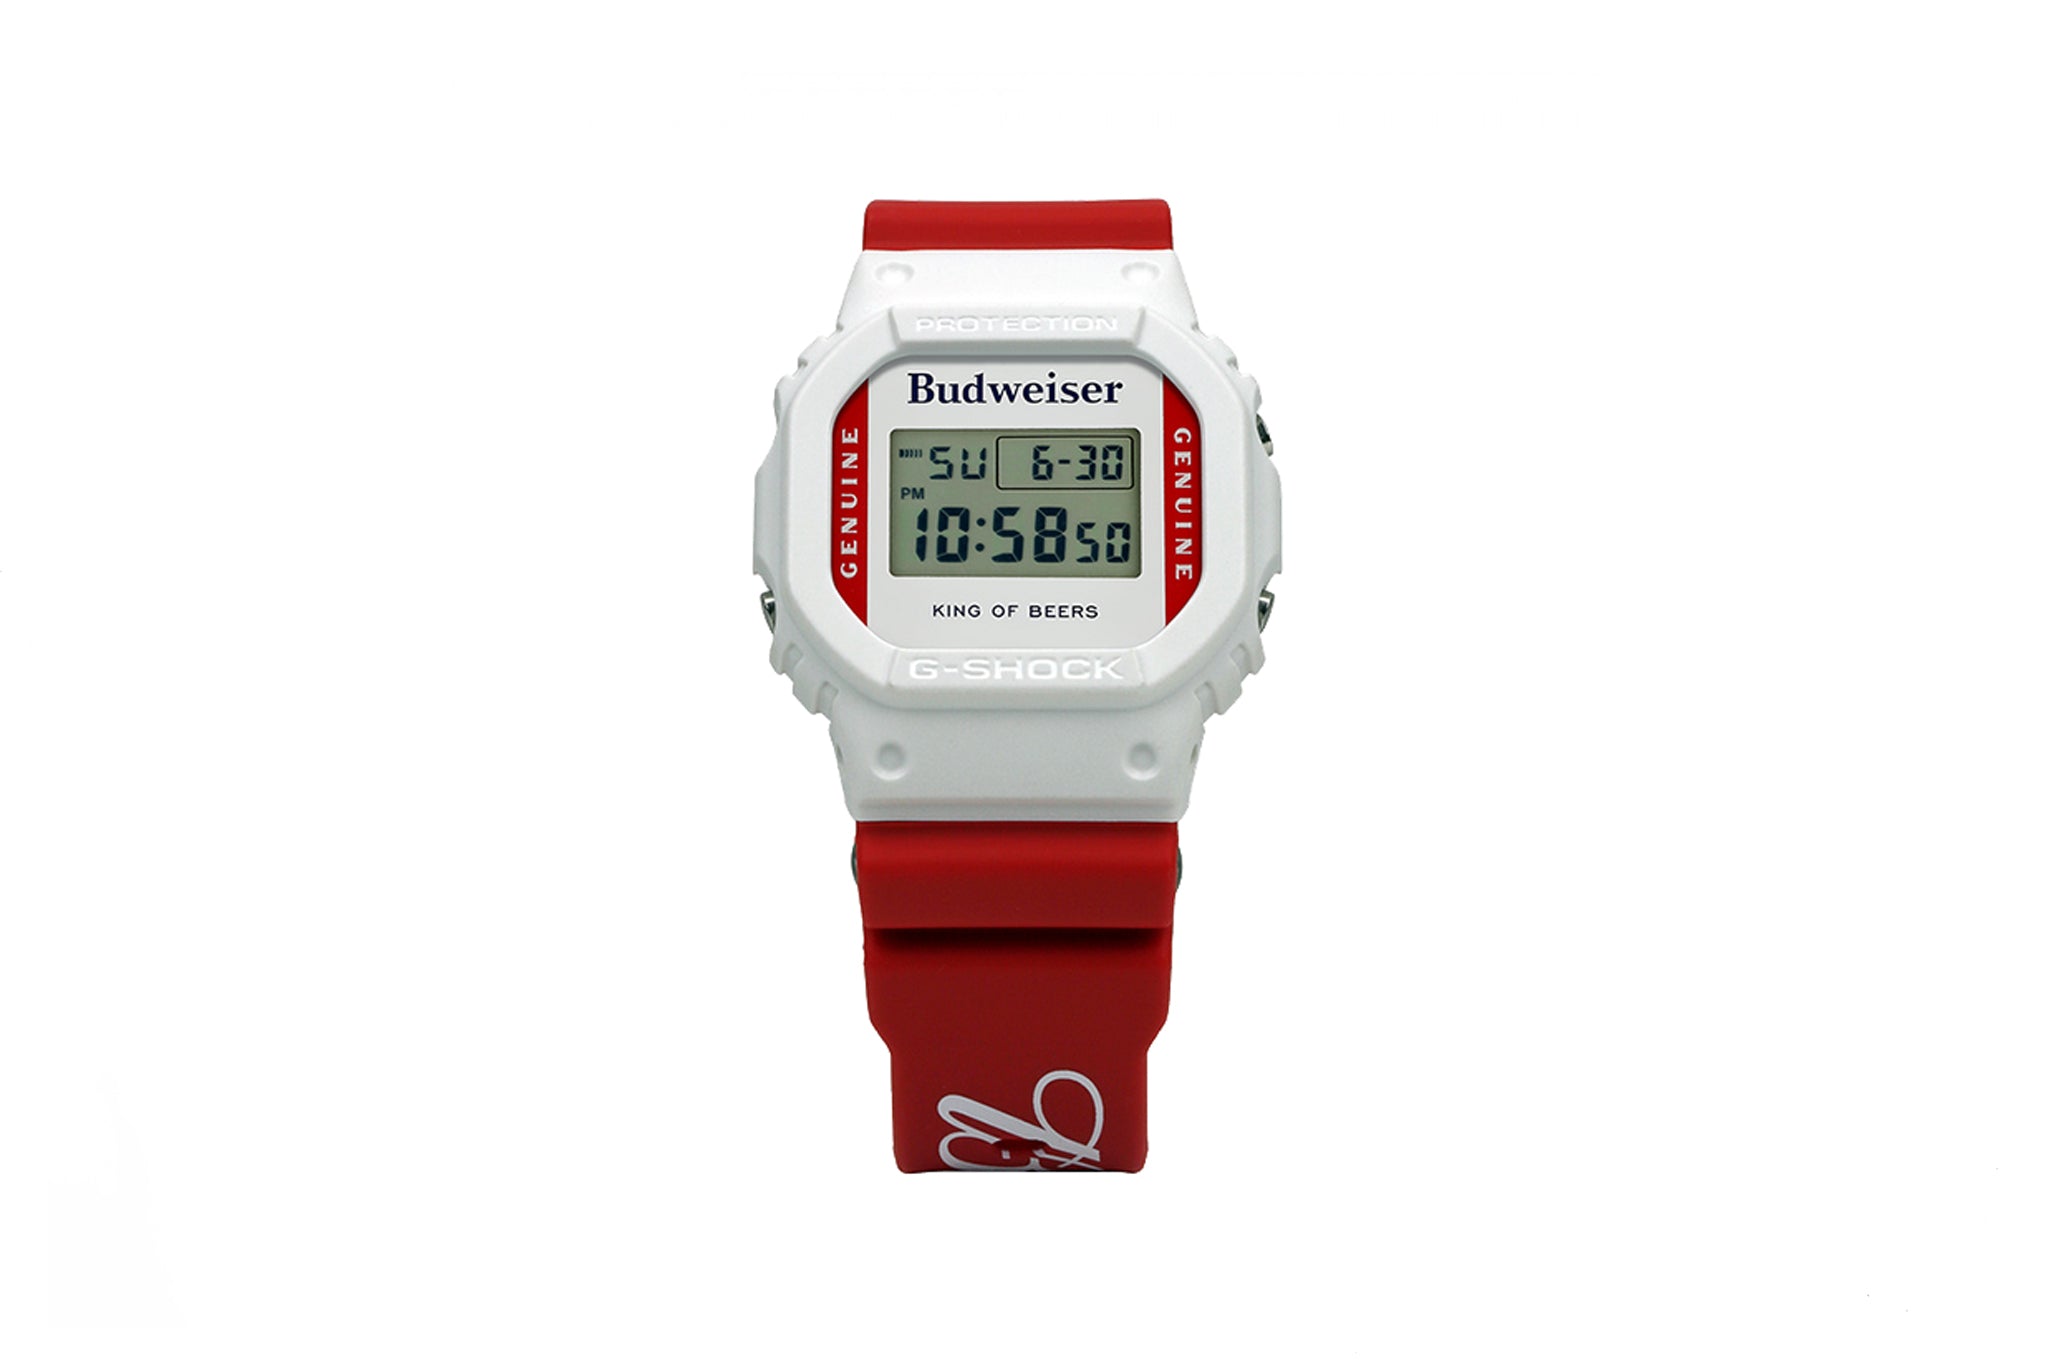 Casio G-Shock Budweiser Limited Edition Watch